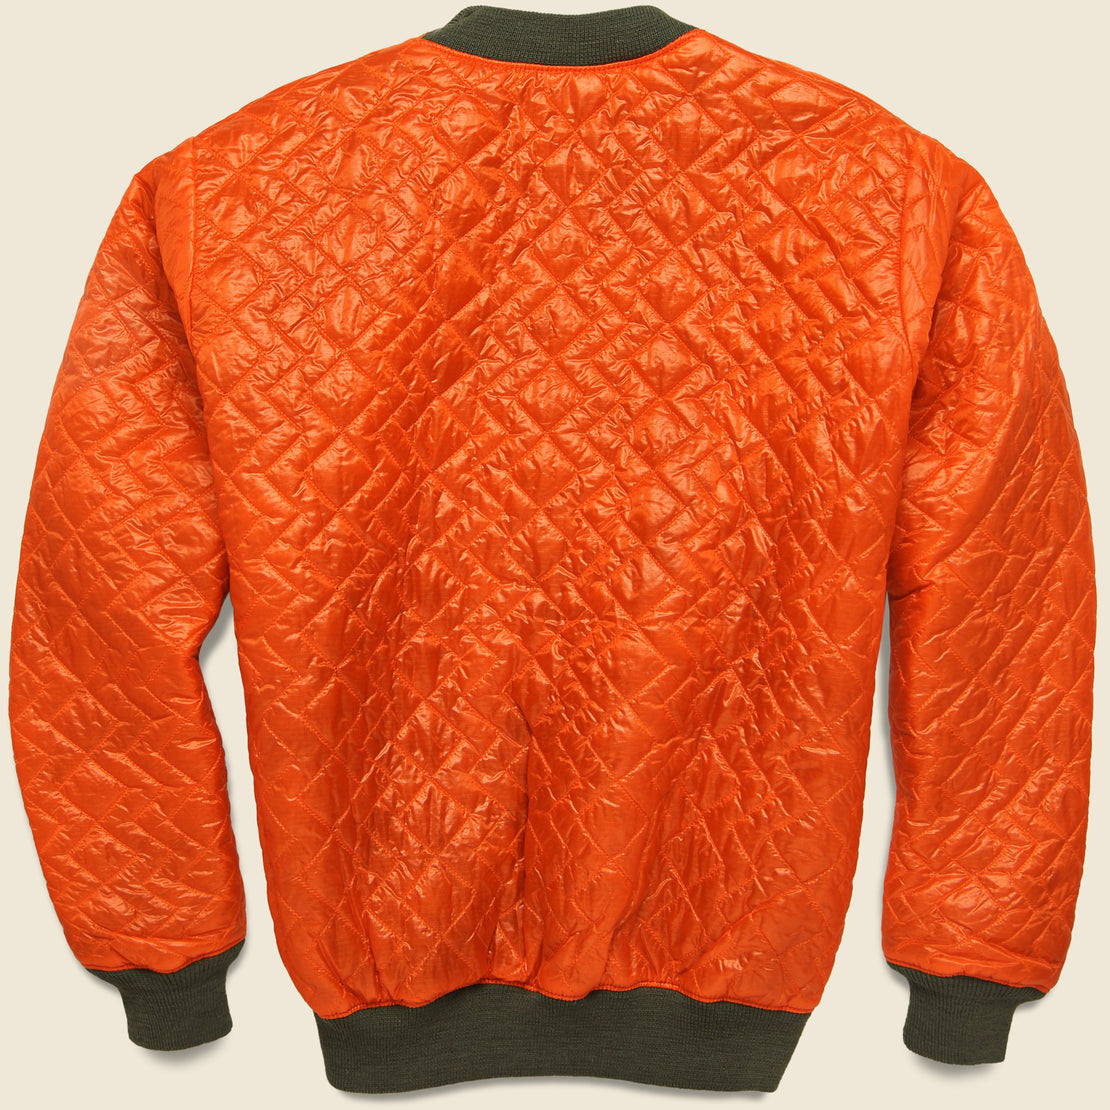 Zigzag Quilted Crewneck - Orange - Monitaly - STAG Provisions - Tops - Fleece / Sweatshirt